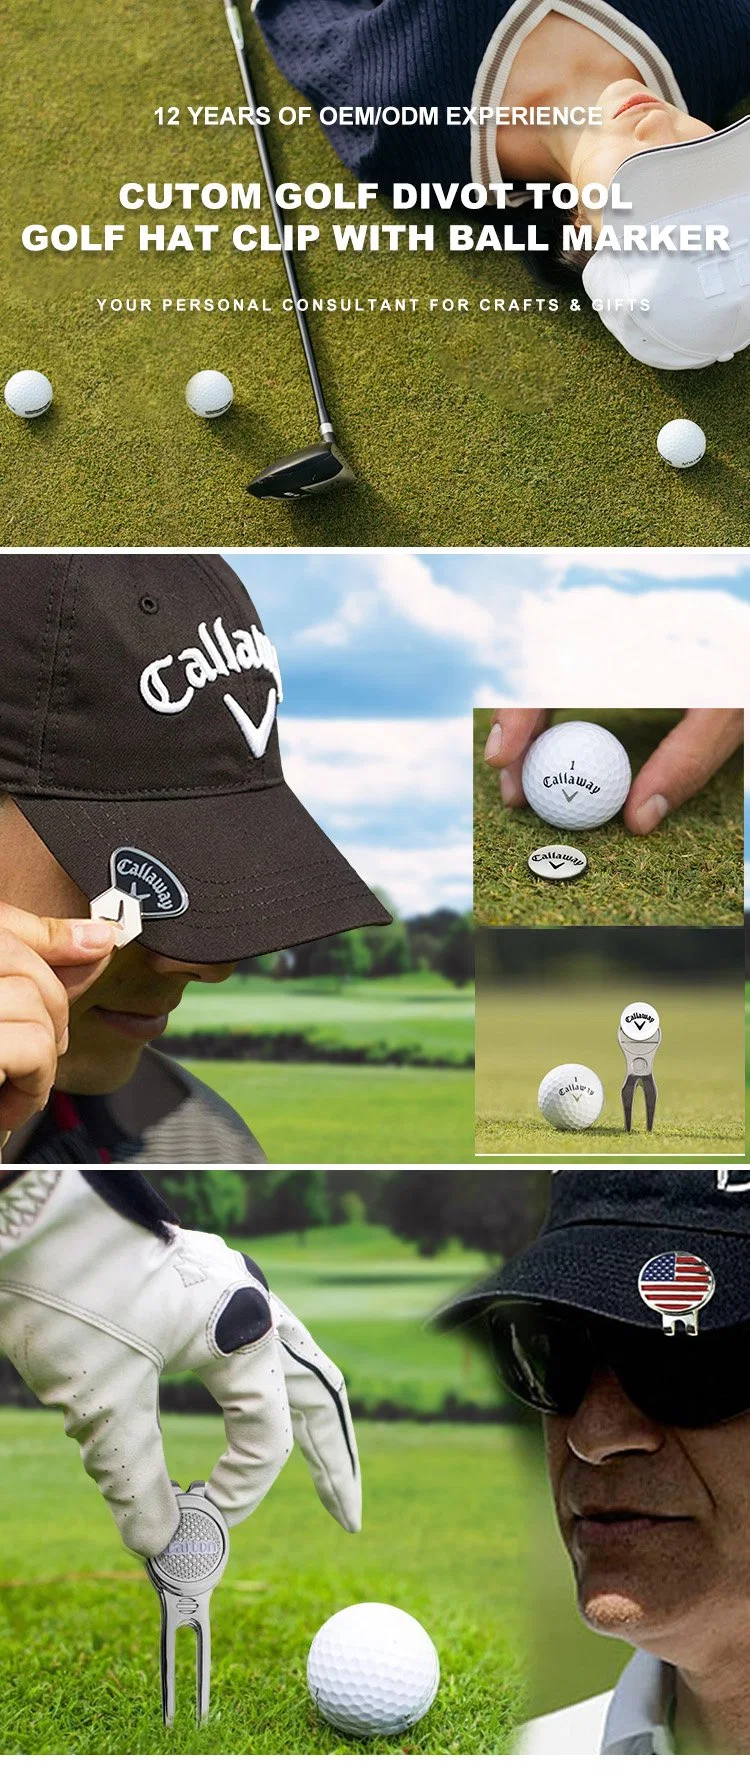 Fashion Cart Polo Shirt Trolley Umbrellas Stamp Custom Blank Magnetic Golf Ball Marker Equipment